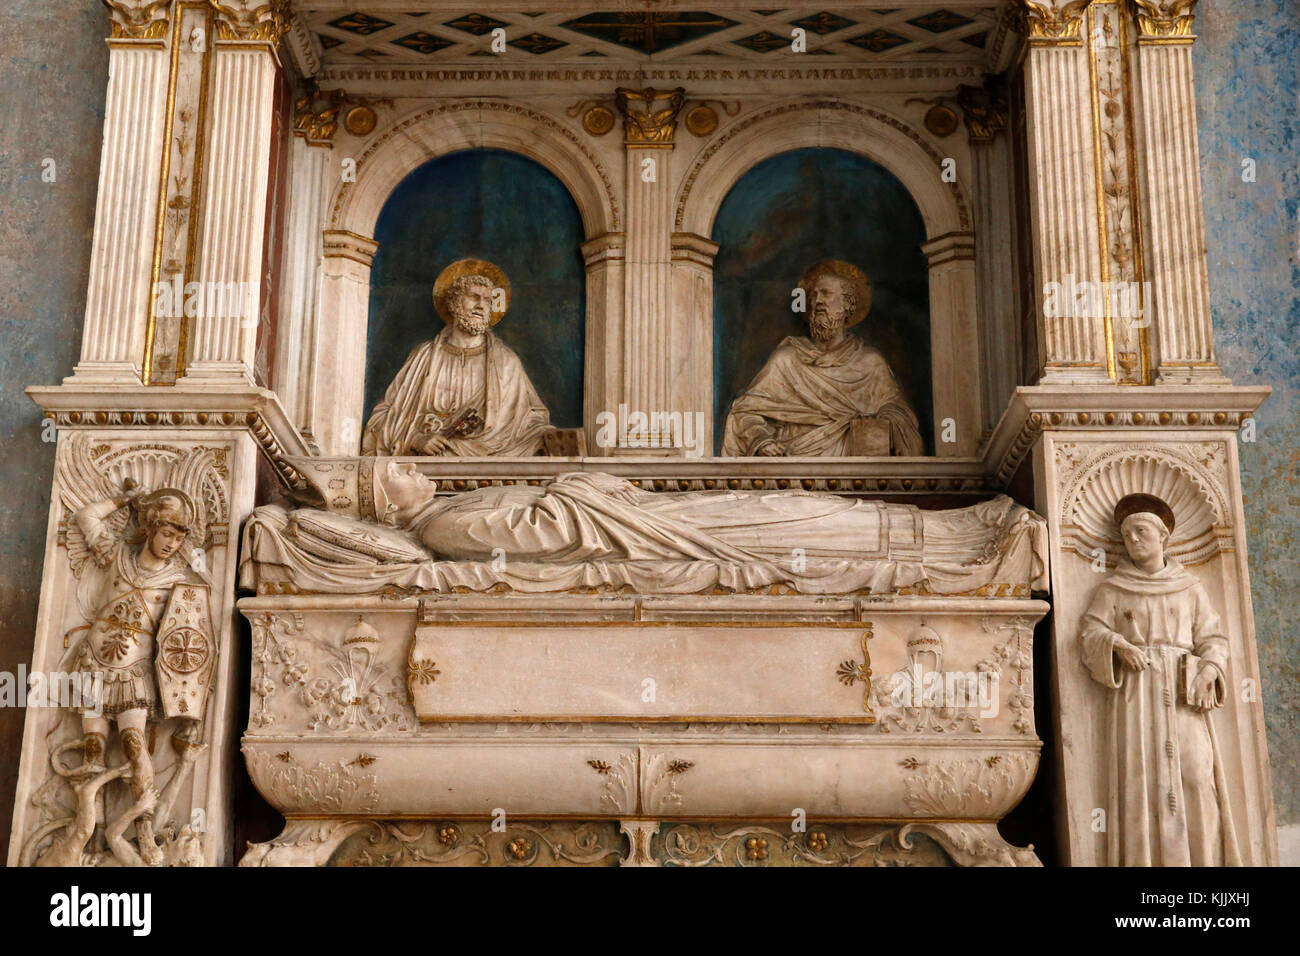 Santa Maria in Aracoeli's church, Rome. Pope Paul II's tomb (?). Italy. Stock Photo